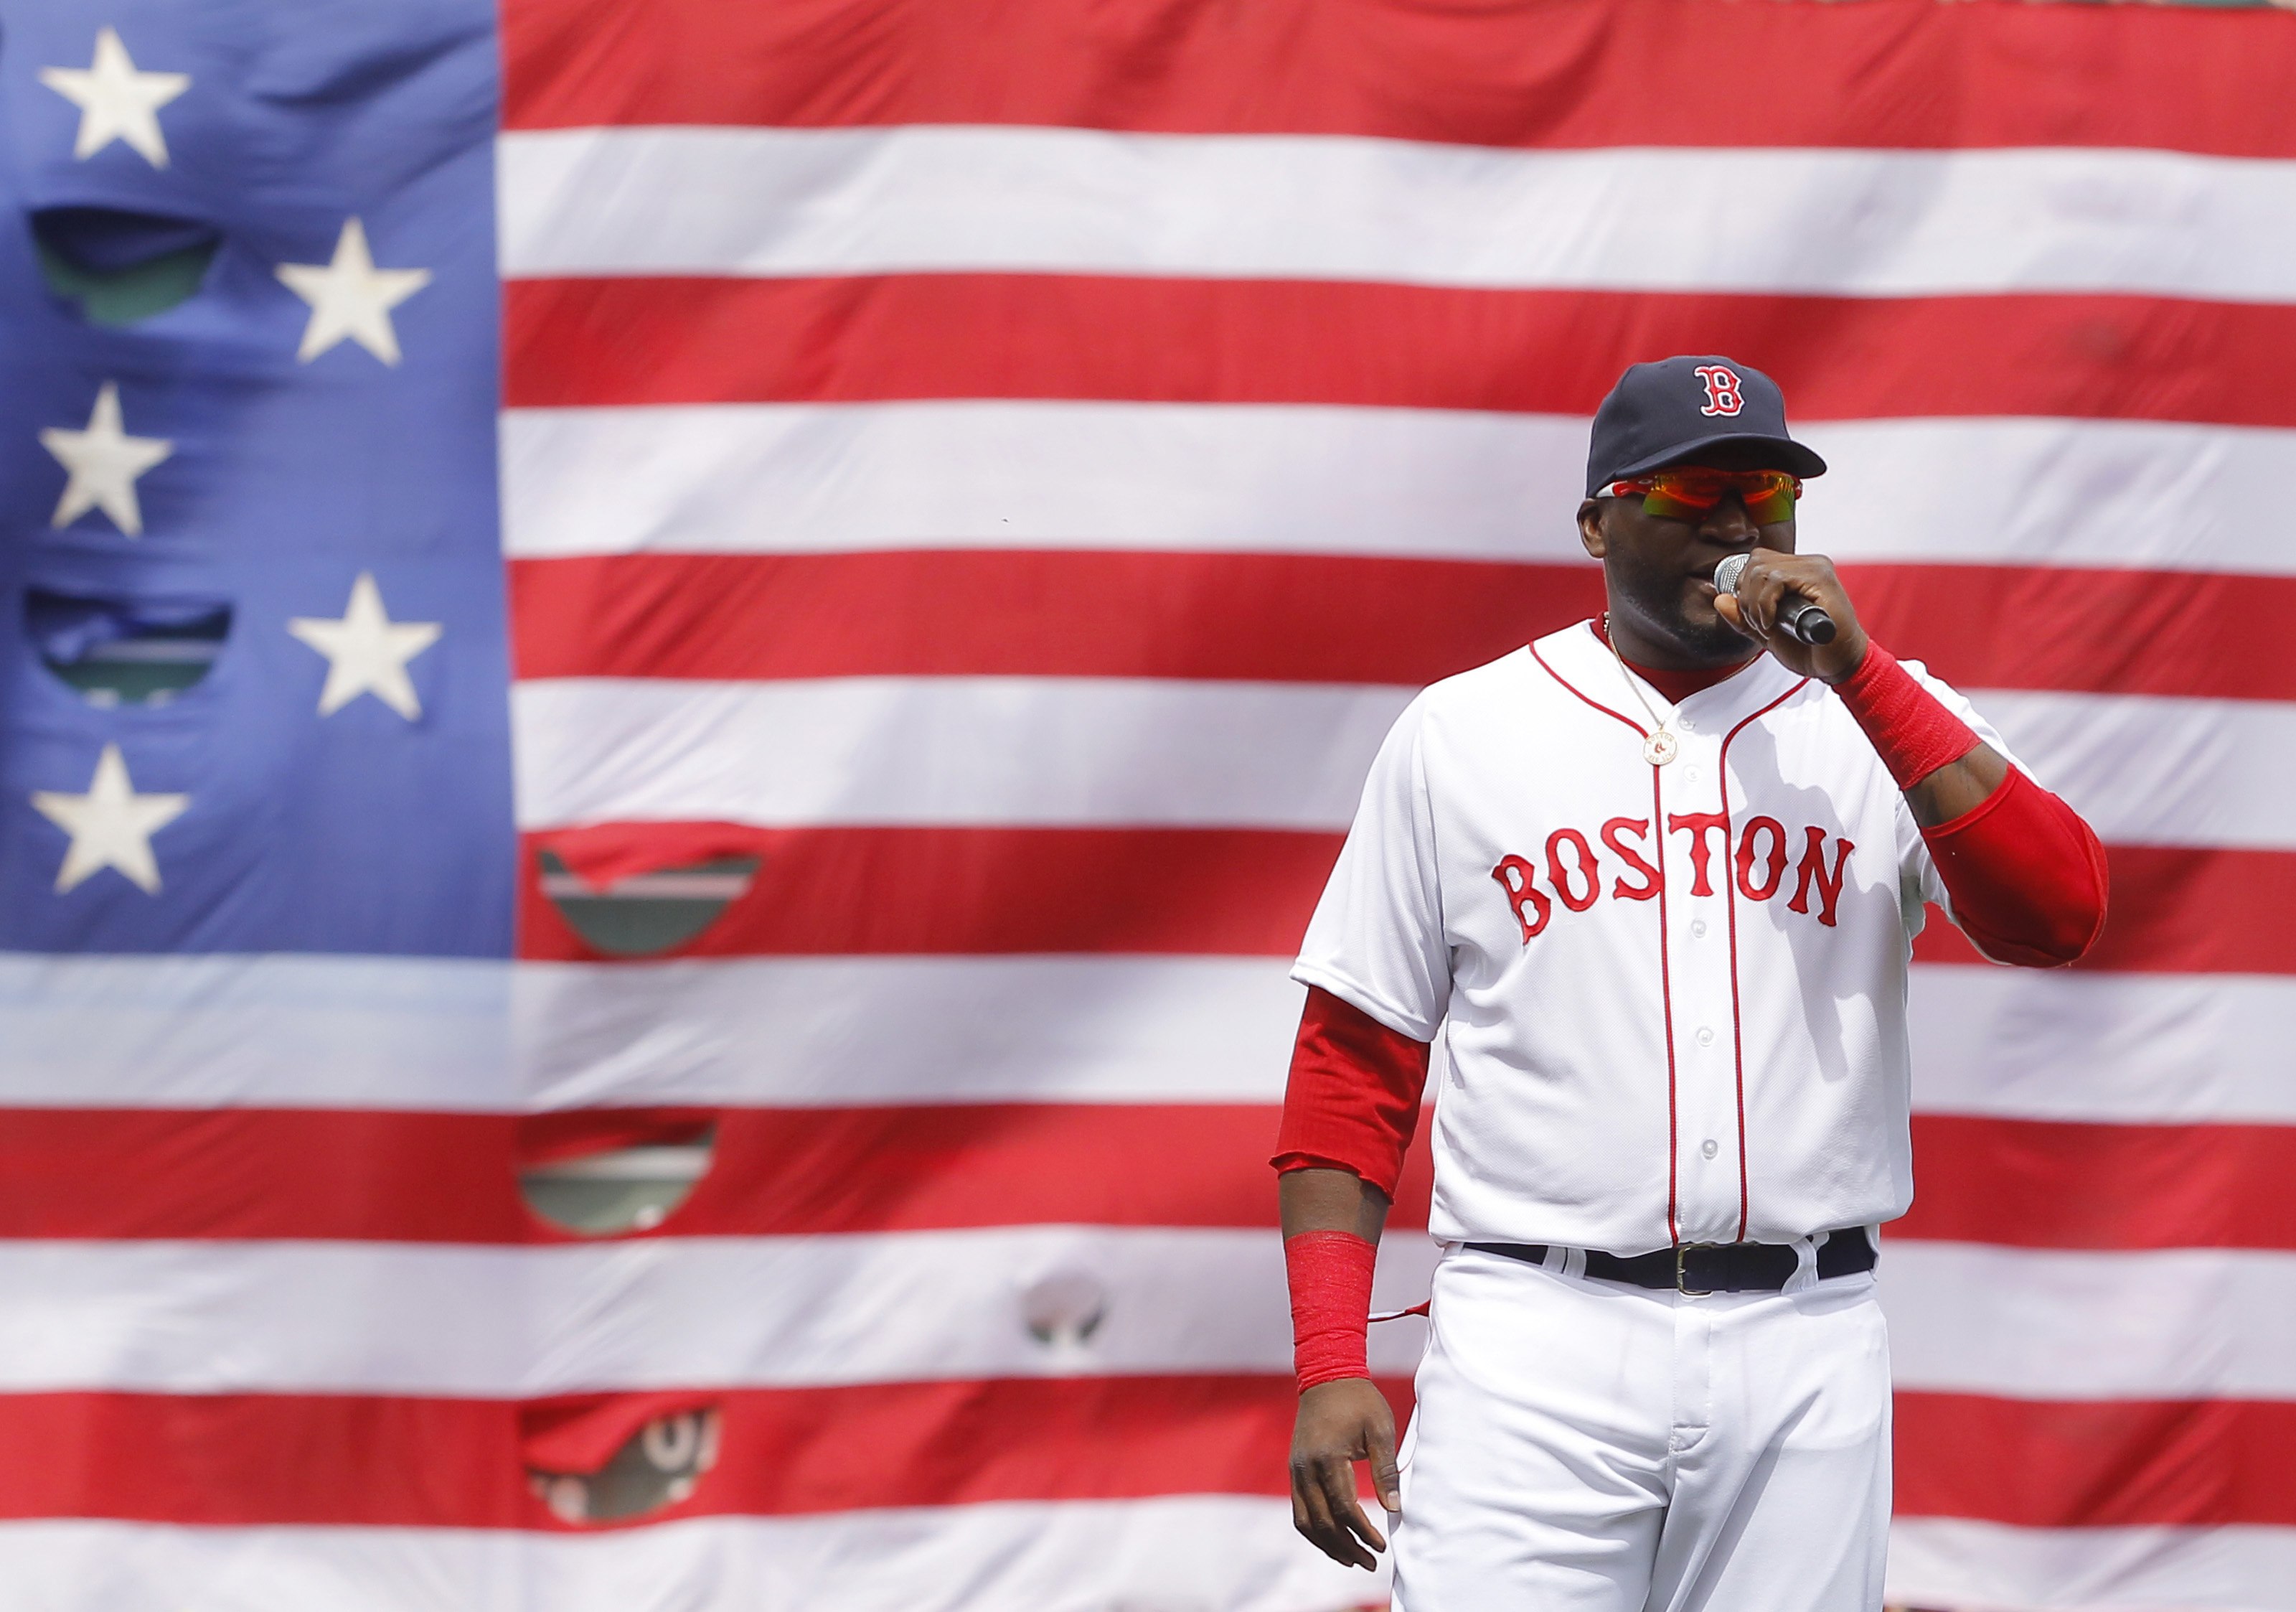 Red Sox Memories: Returning to Fenway following tragic Boston